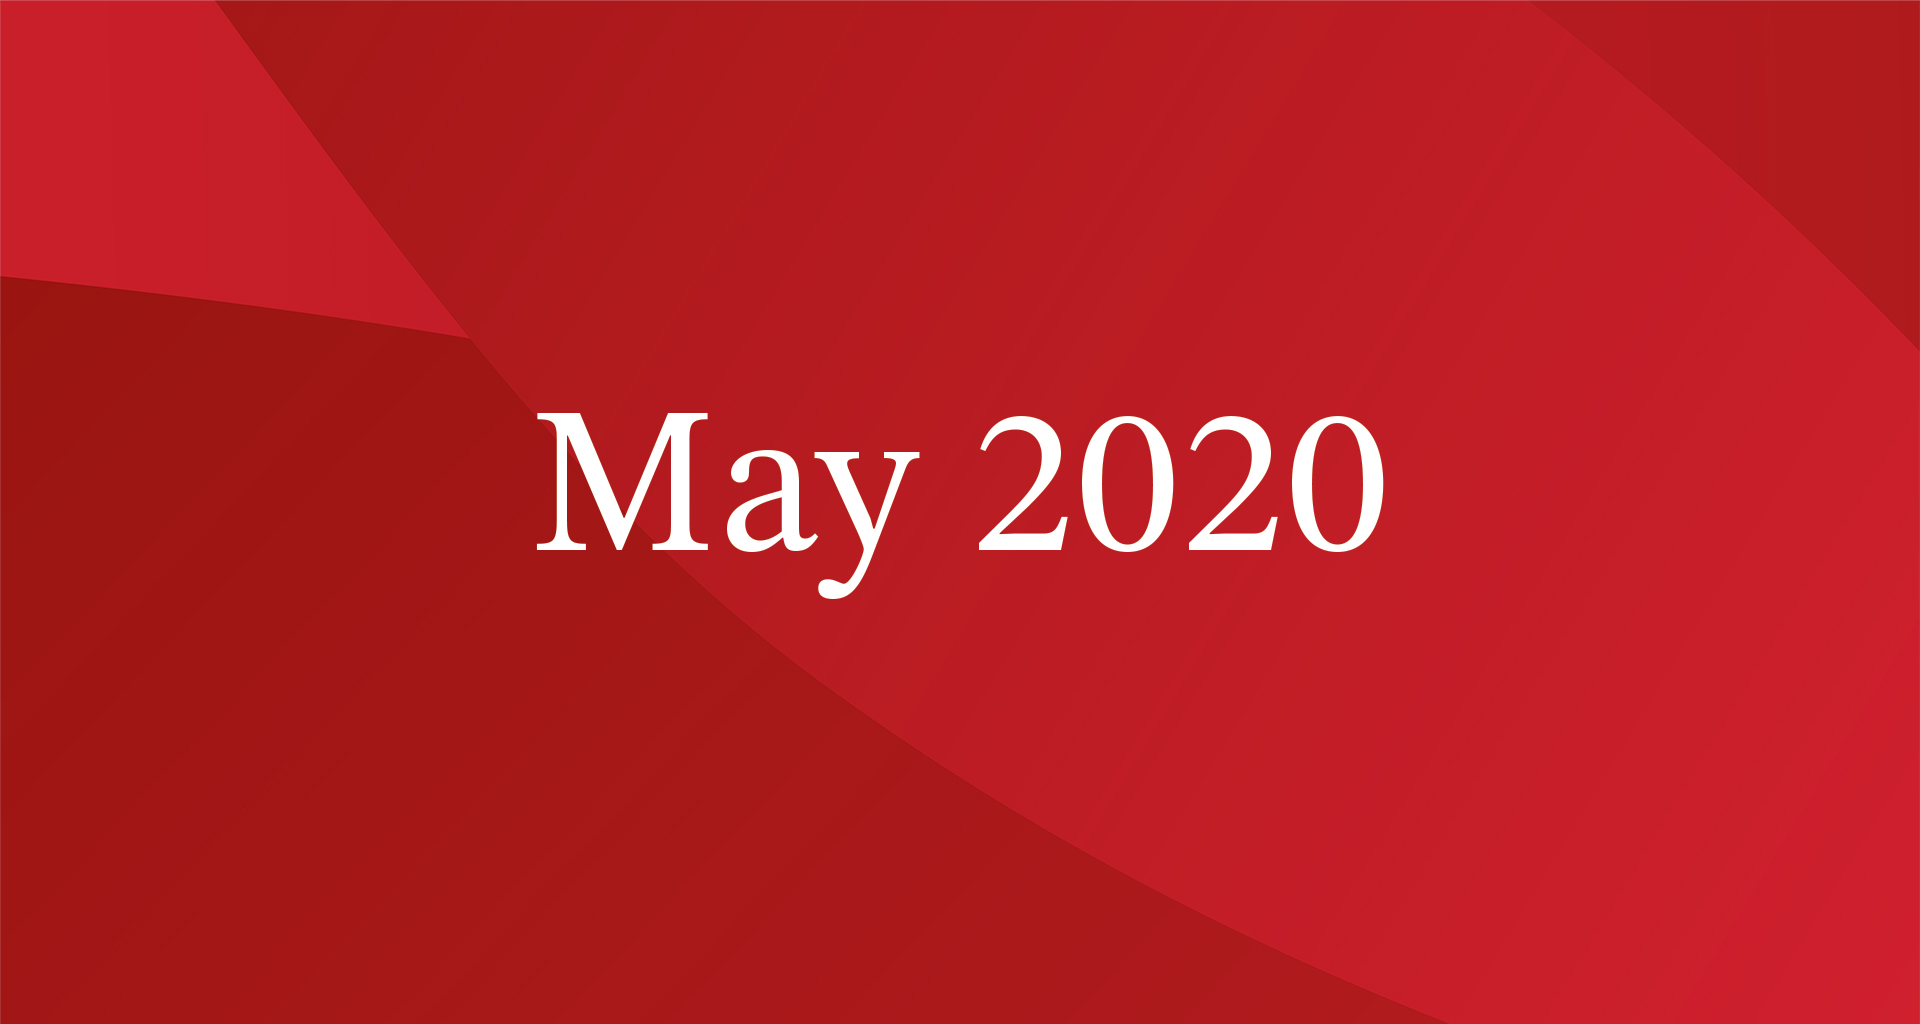 May 2020 President's Blog Image